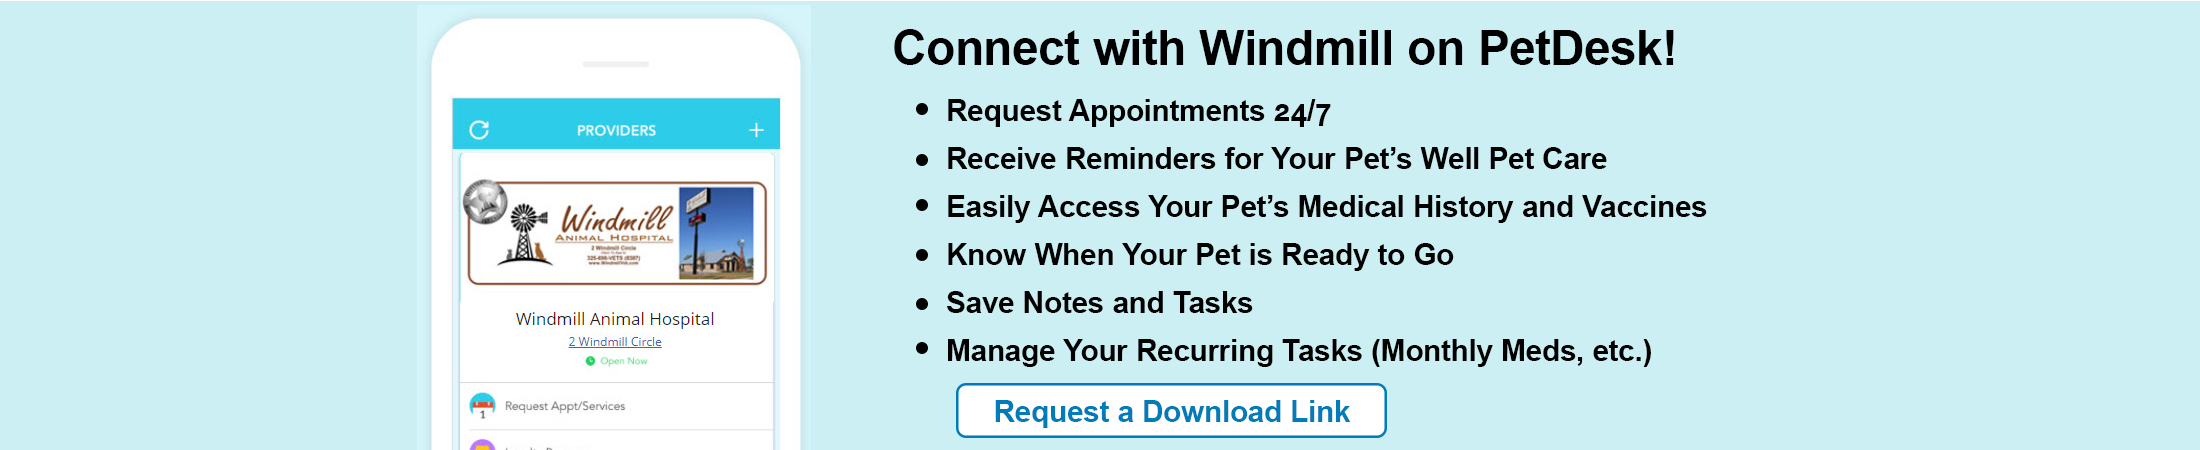 Windmill Animal Hospital Pet Desk Backup